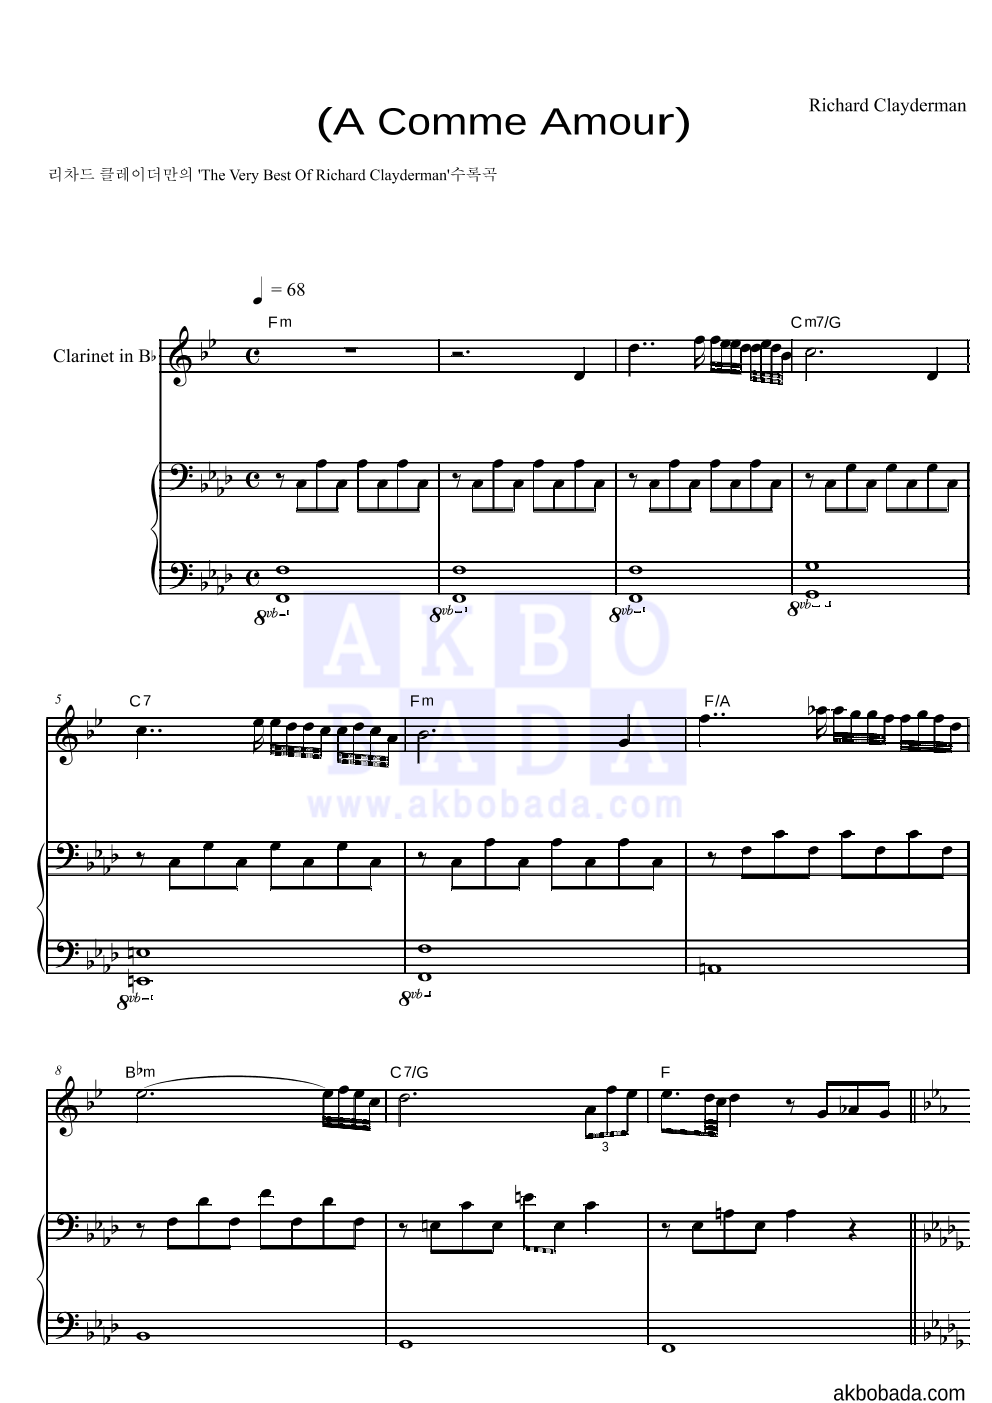 Richard Clayderman  - 가을의 속삭임 클라리넷&피아노 악보 